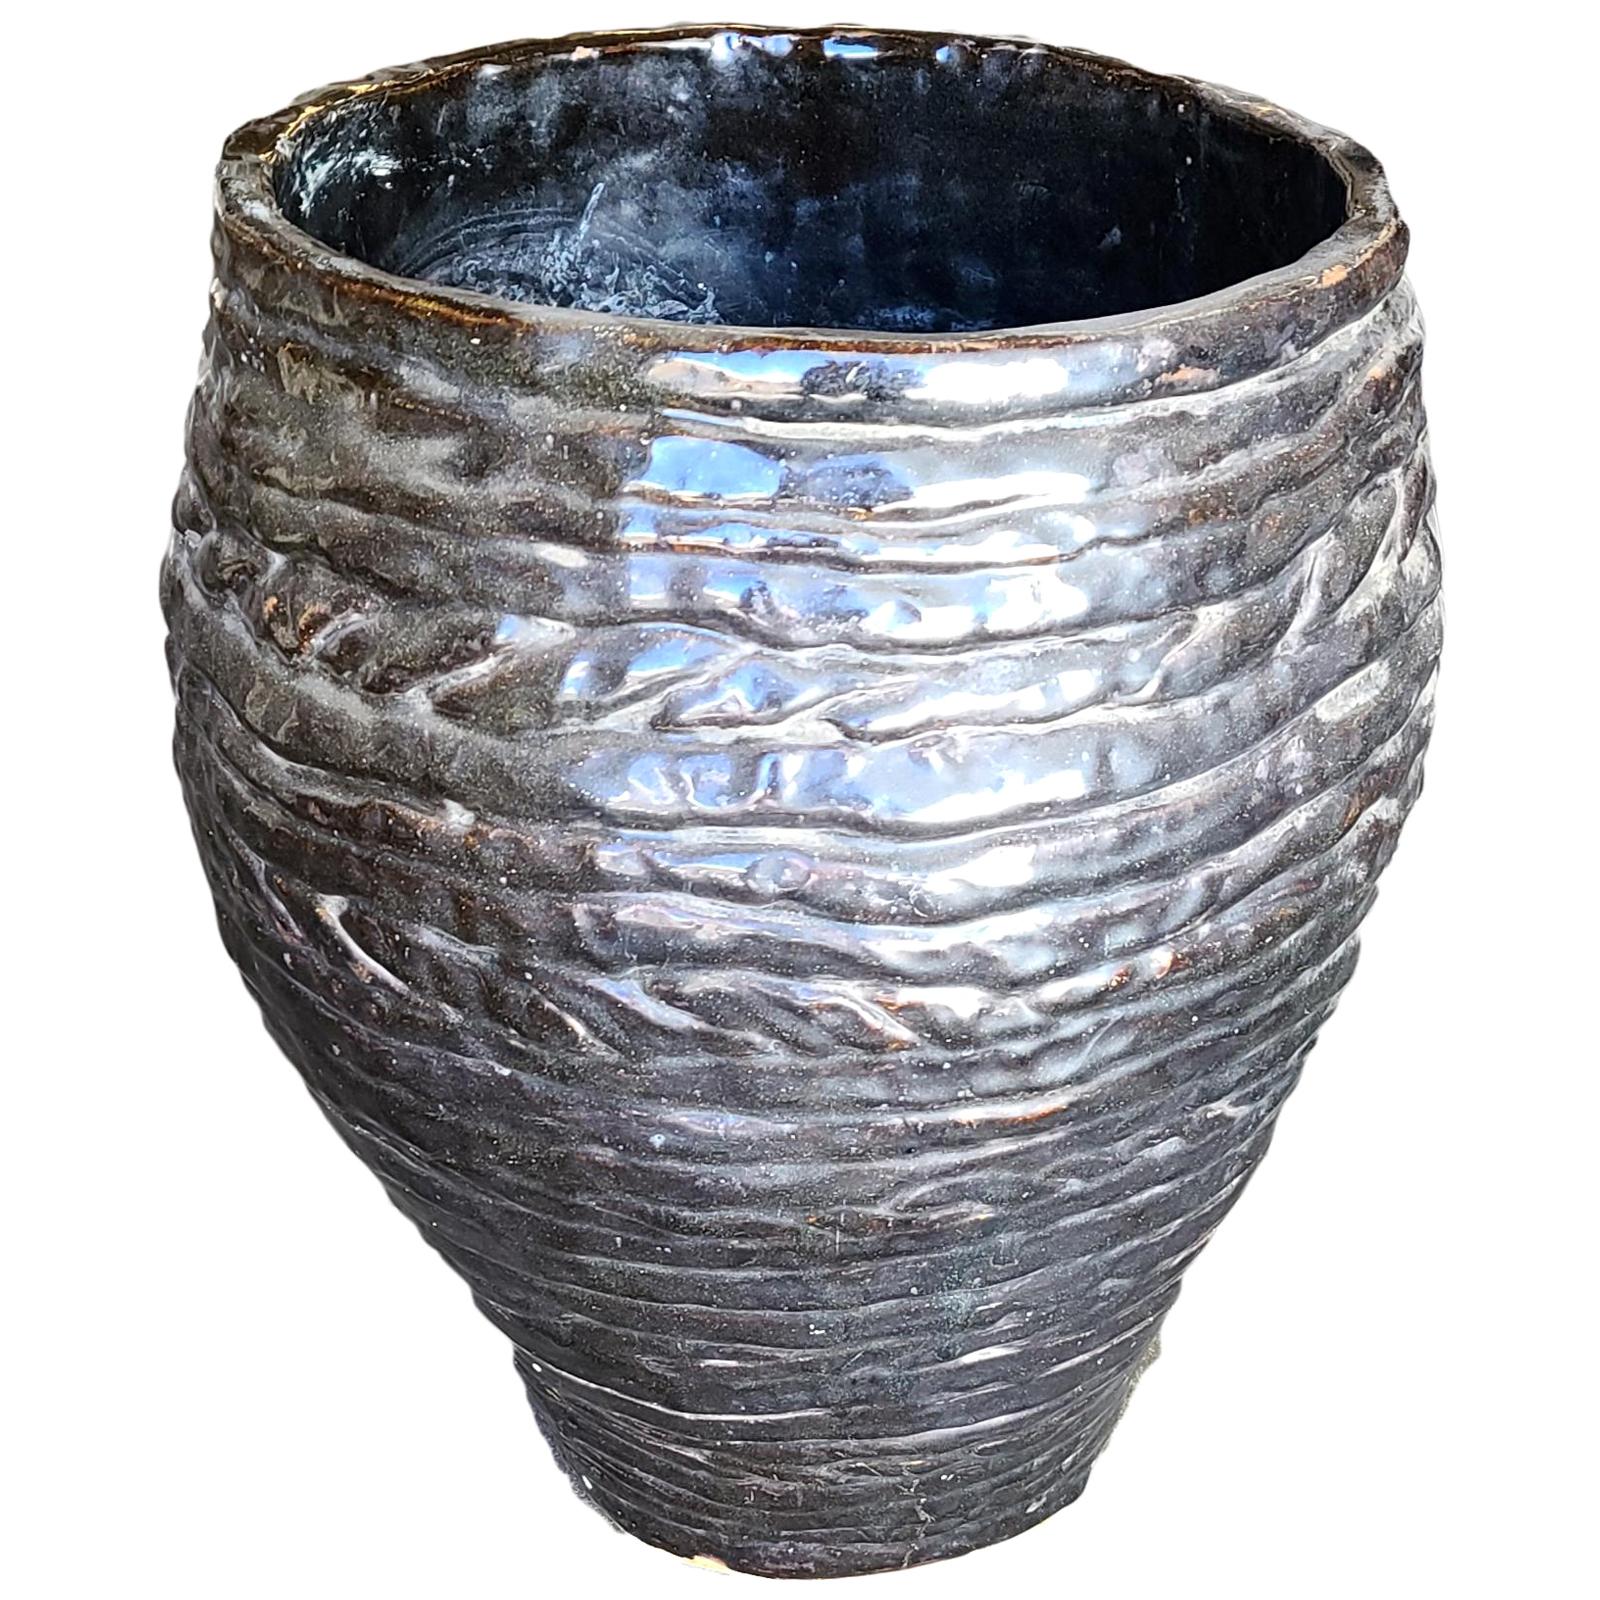 Hand-Spun Layered Clay Art Pottery Vase Signed Davison